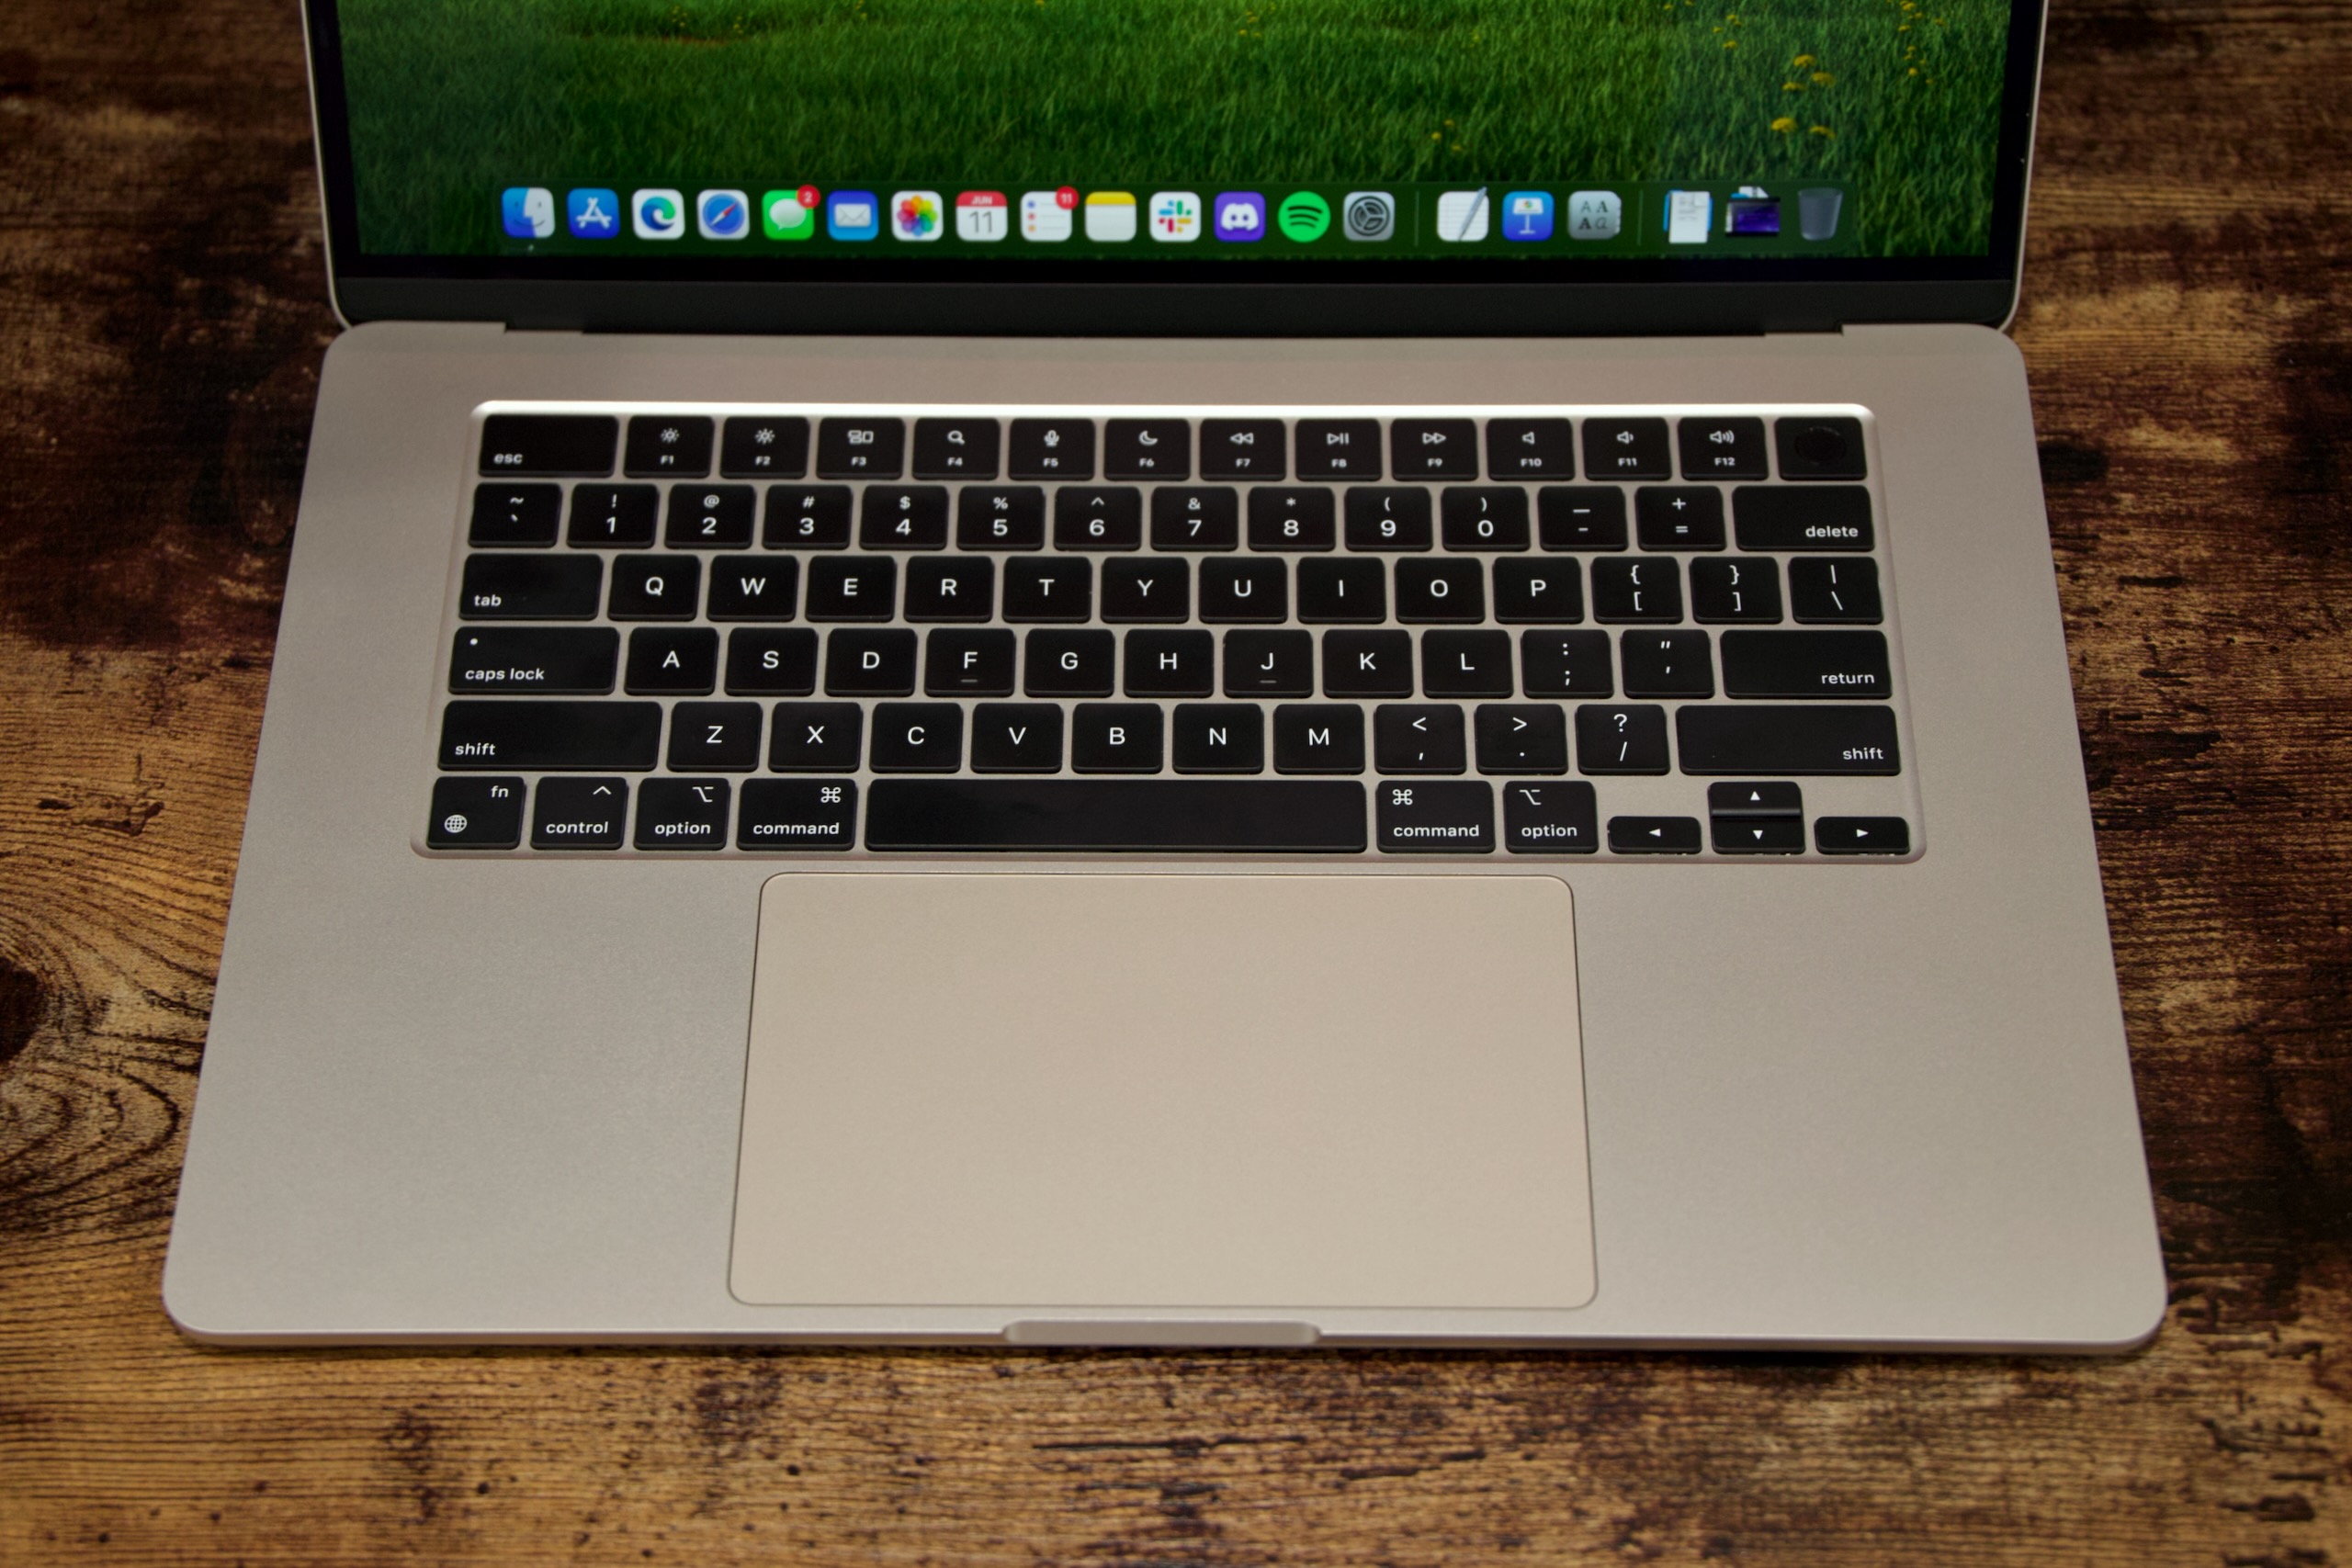 NEW 15 inch MacBook Air VS 13 inch MacBook Air REVIEW of Specs! 